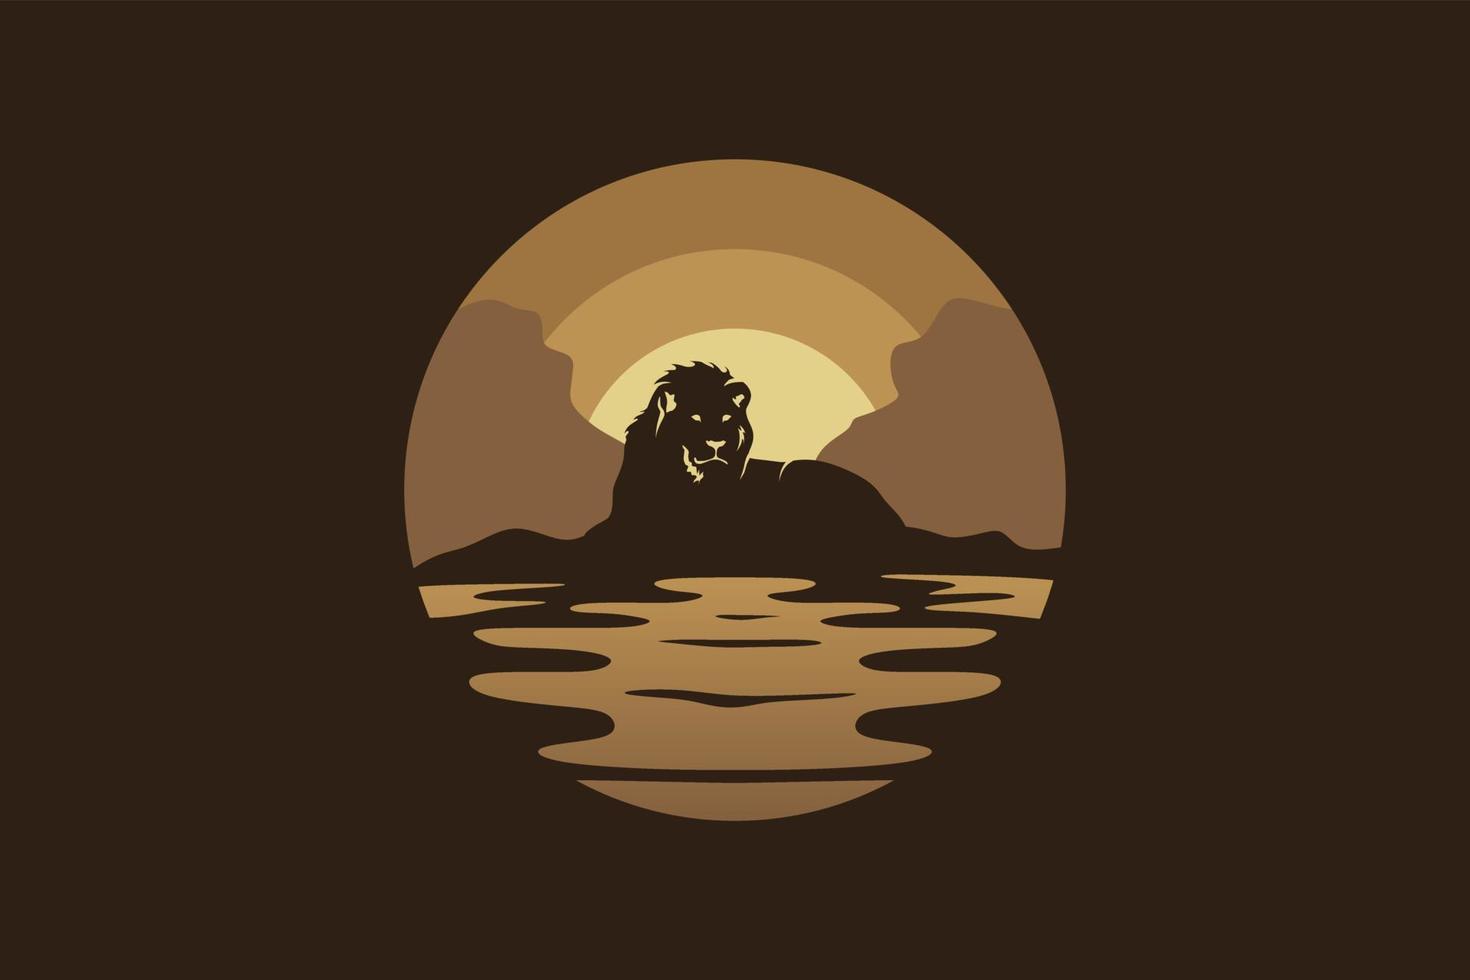 Lion logo night landscape design. Silhouette of a lion blends with a night landscape vector illustration.